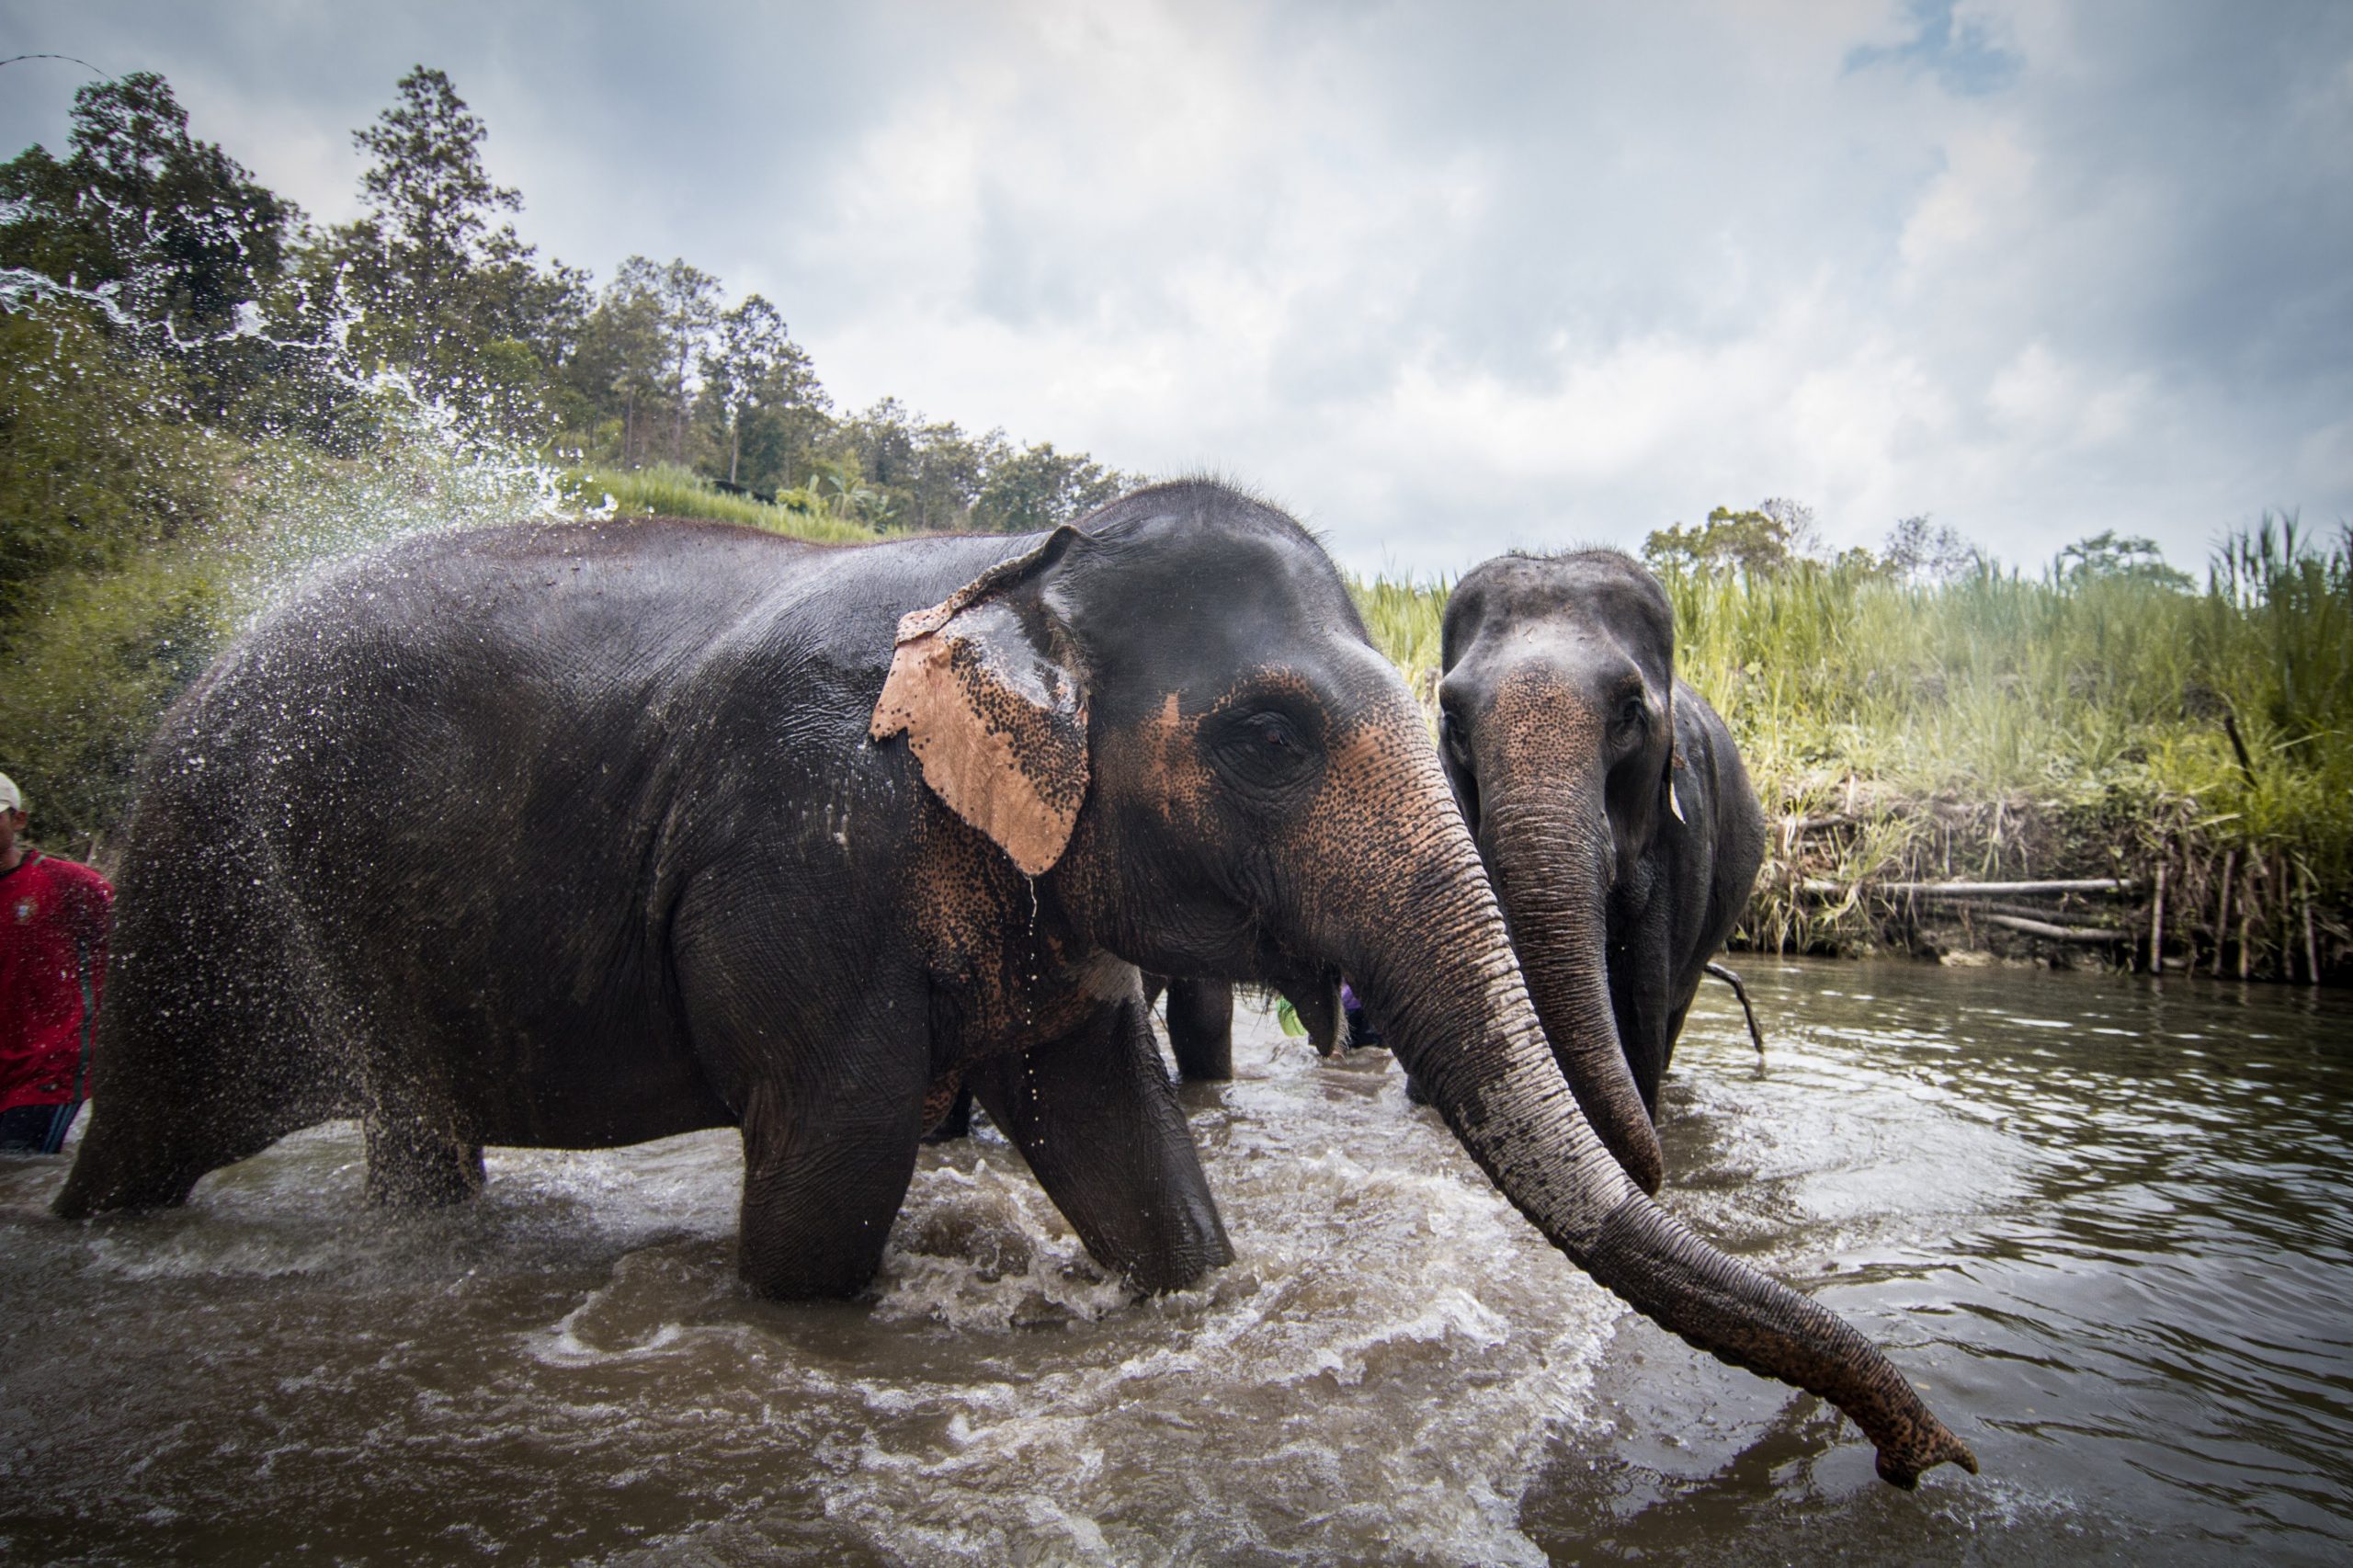 Elephants in Thailand